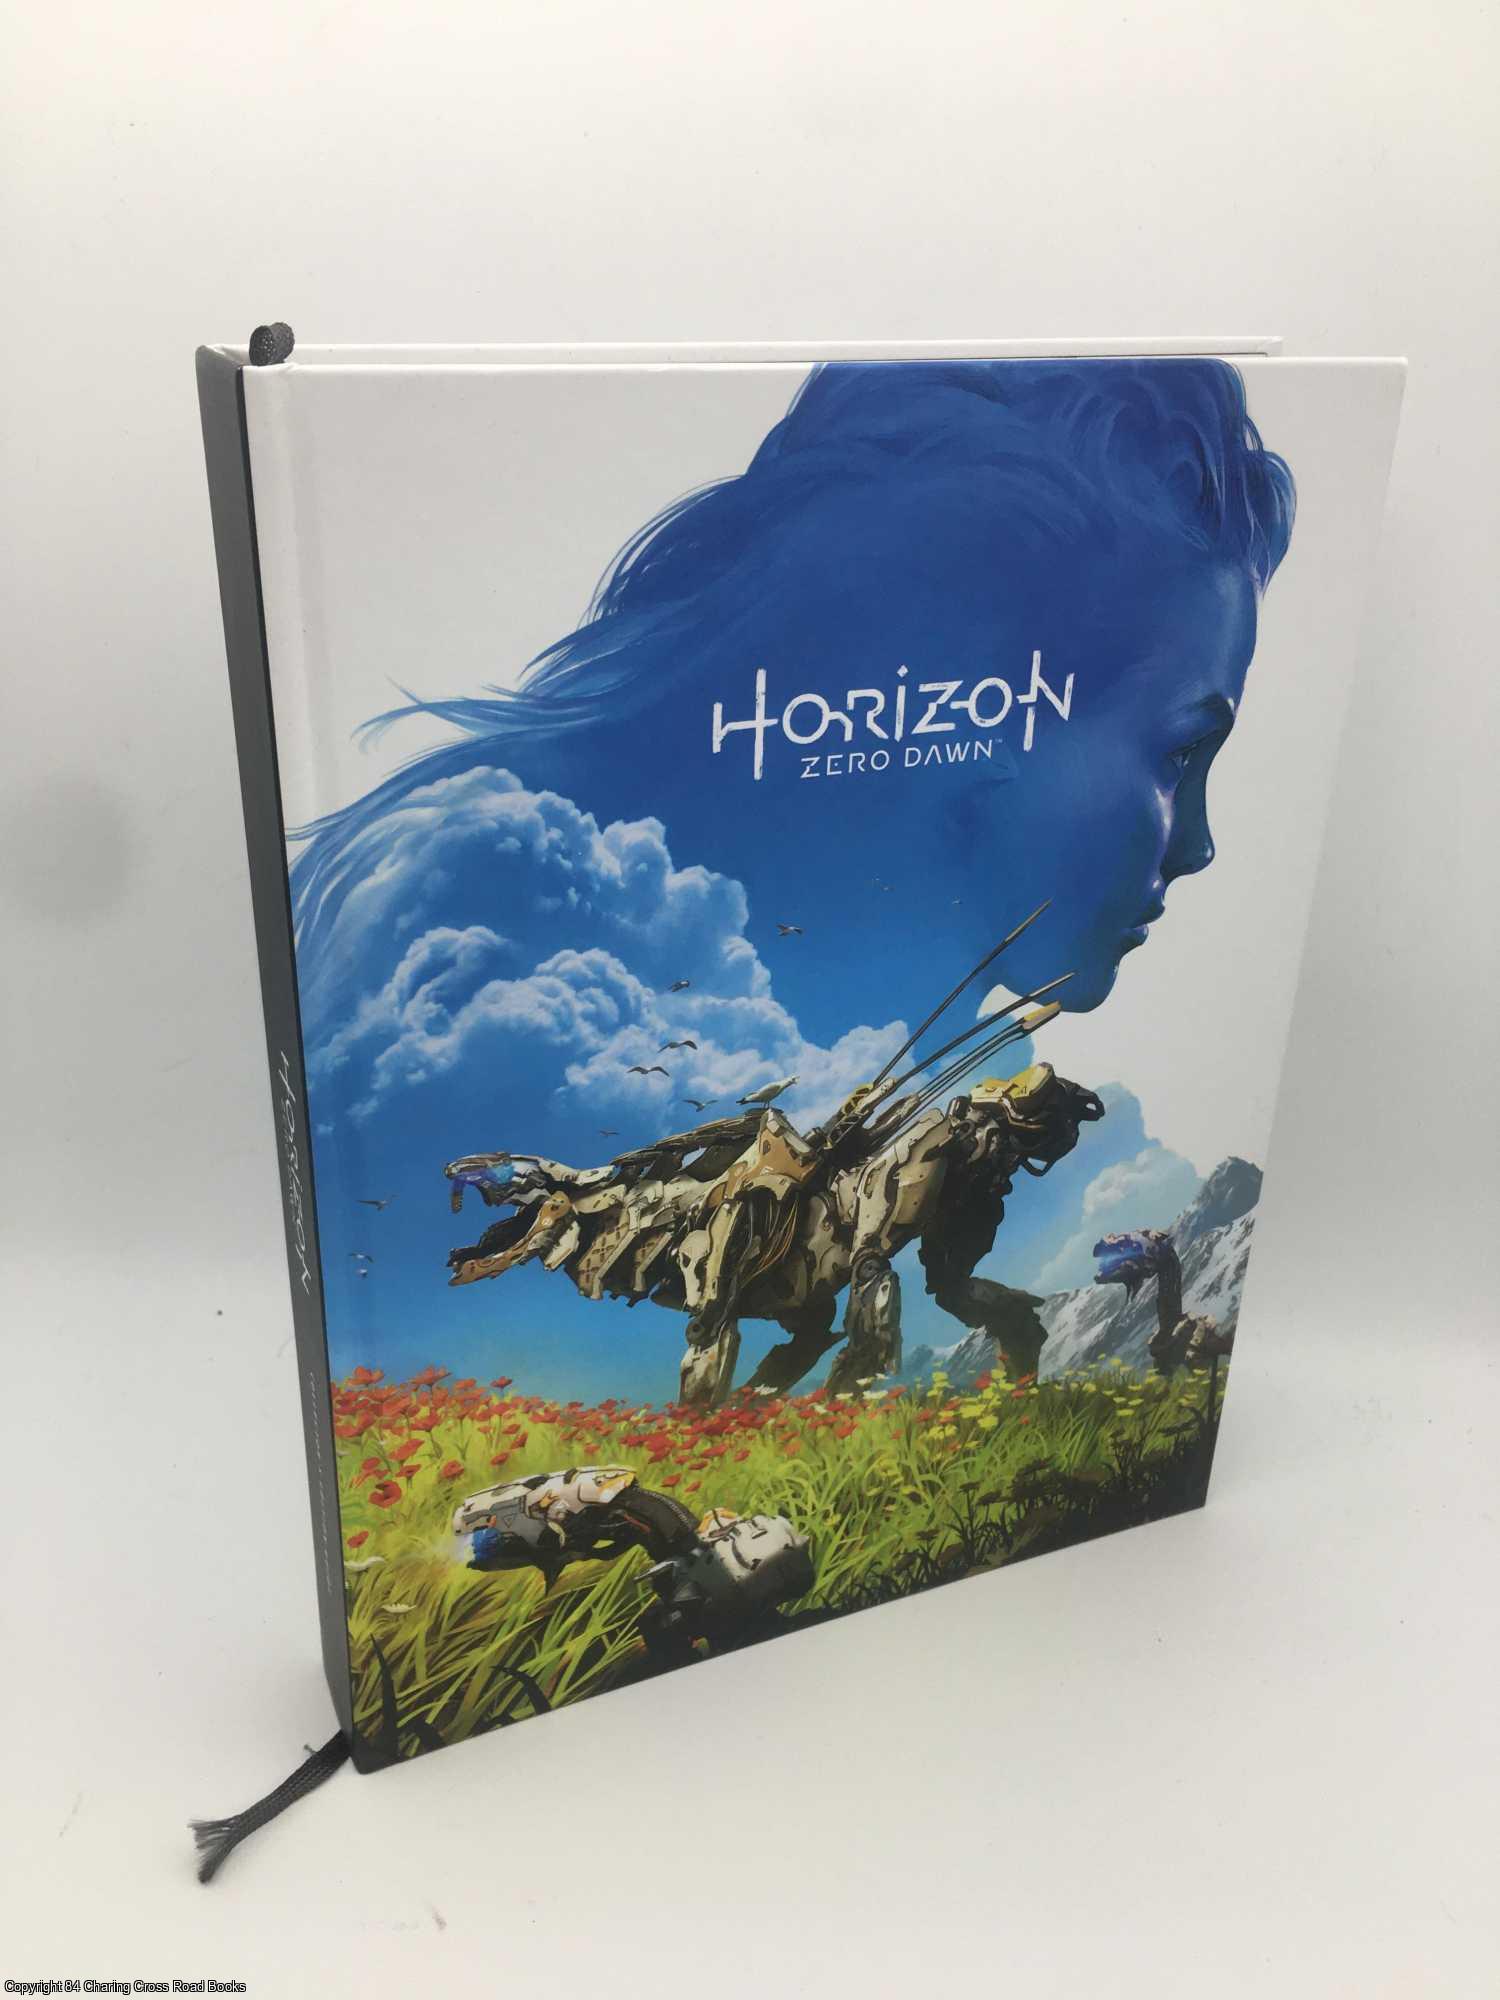 Byrne, Bruce - Horizon Zero Dawn Collector's Edition Guide